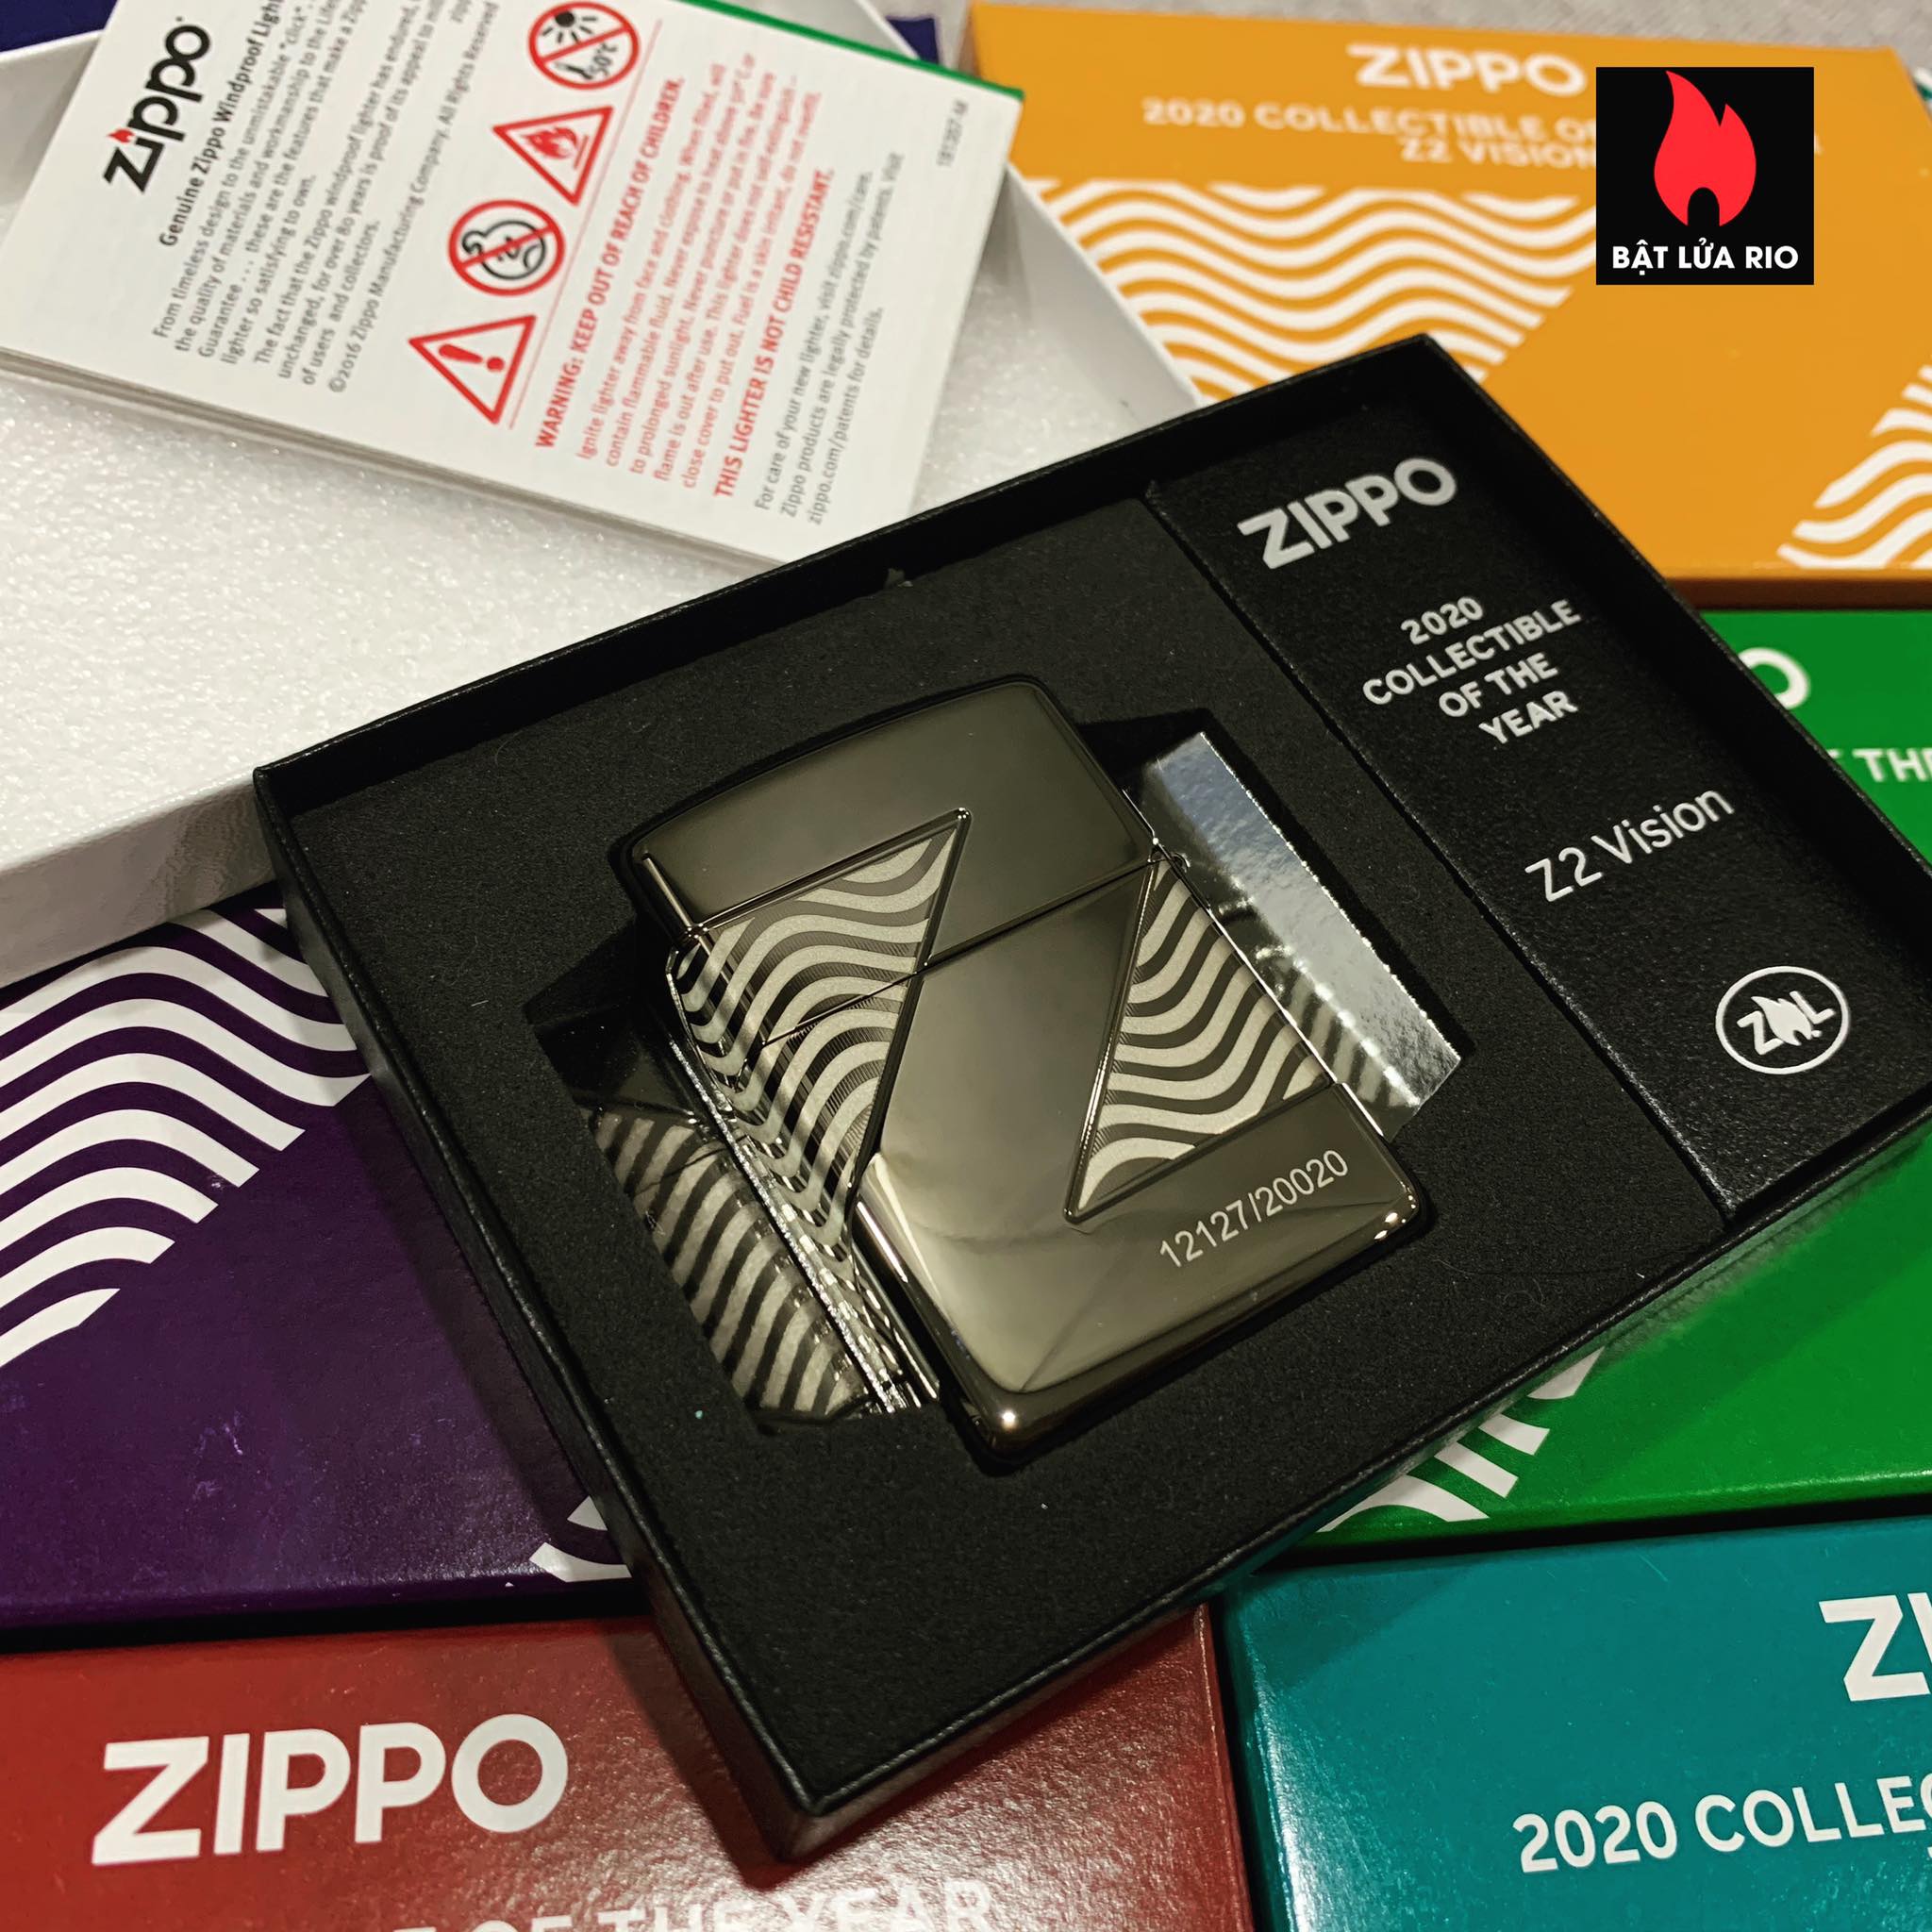 Zippo 49194 - Zippo 2020 Collectible Of The Year - Zippo Coty 2020 - Zippo Z2 Vision 24